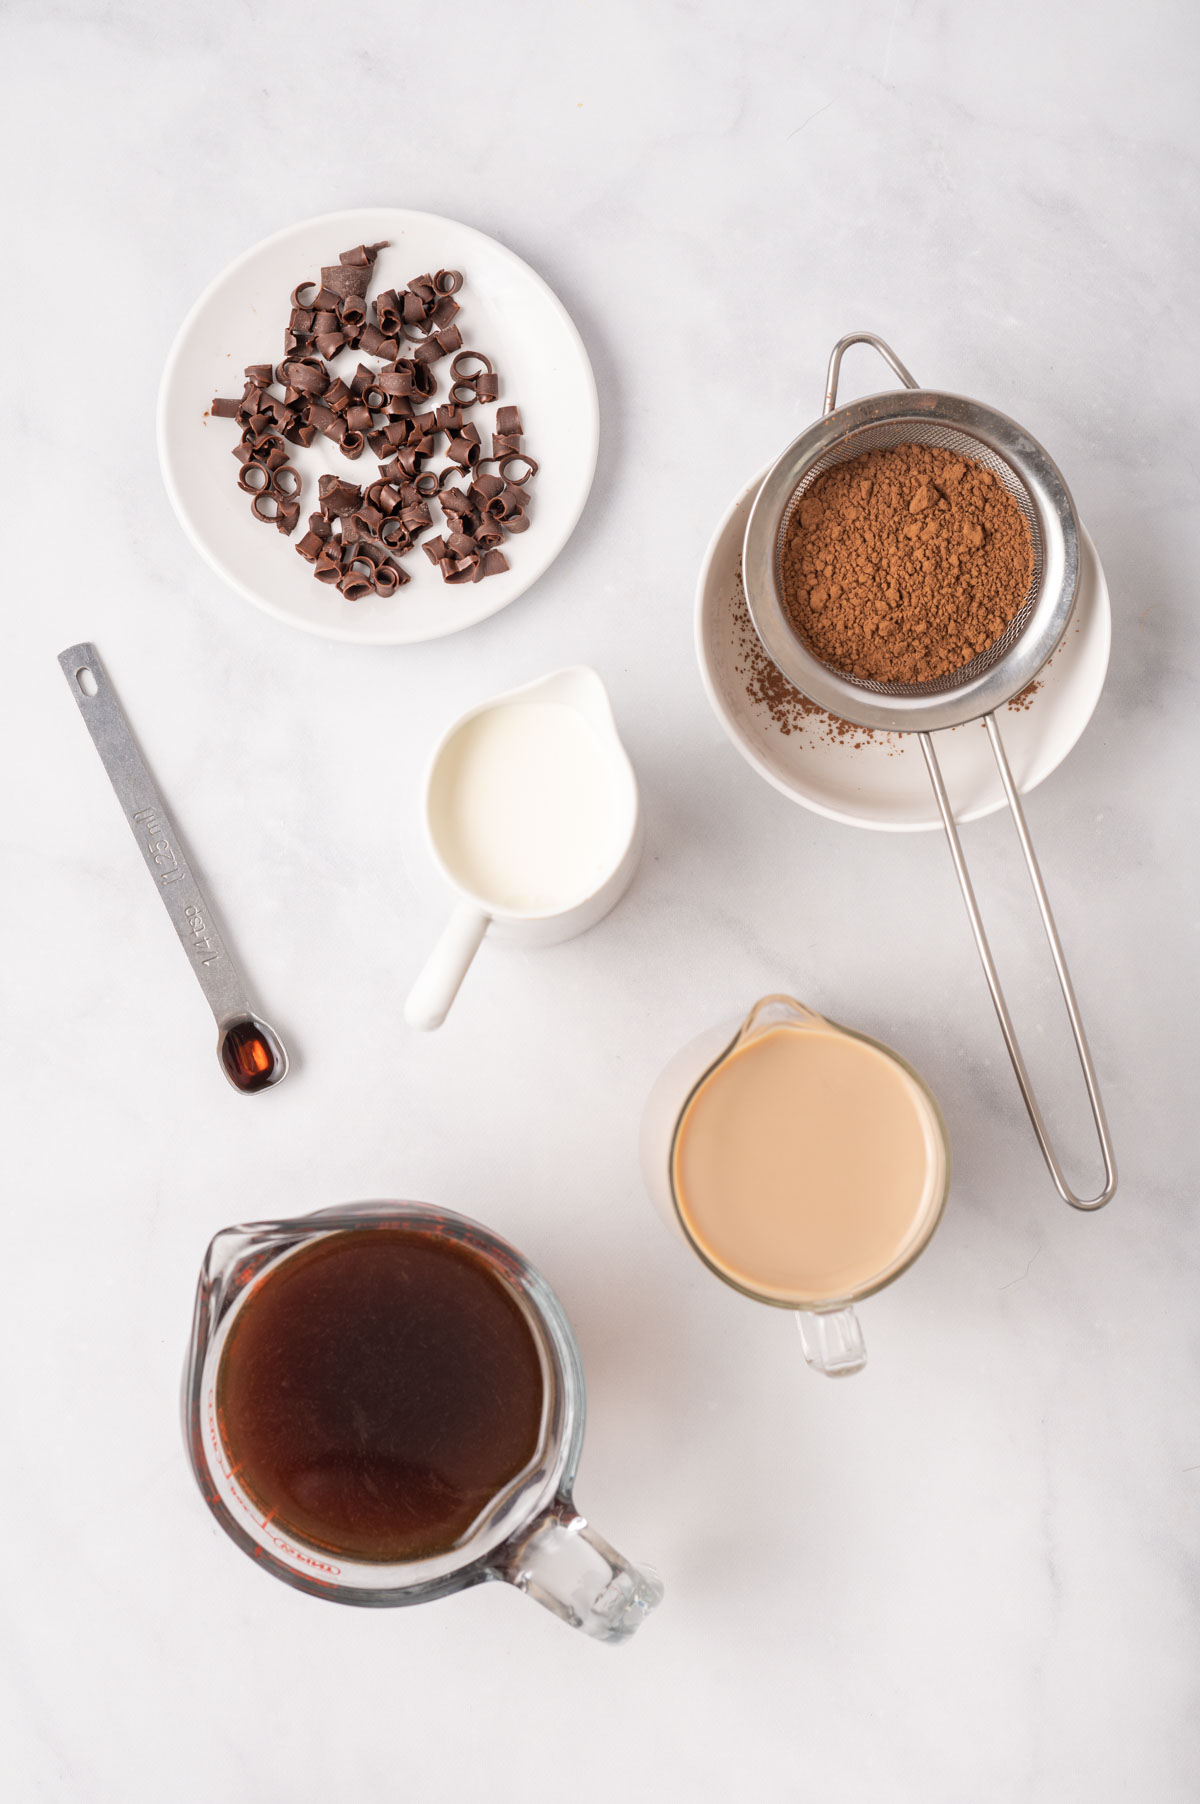 Ingredients to make Irish Cream Coffee